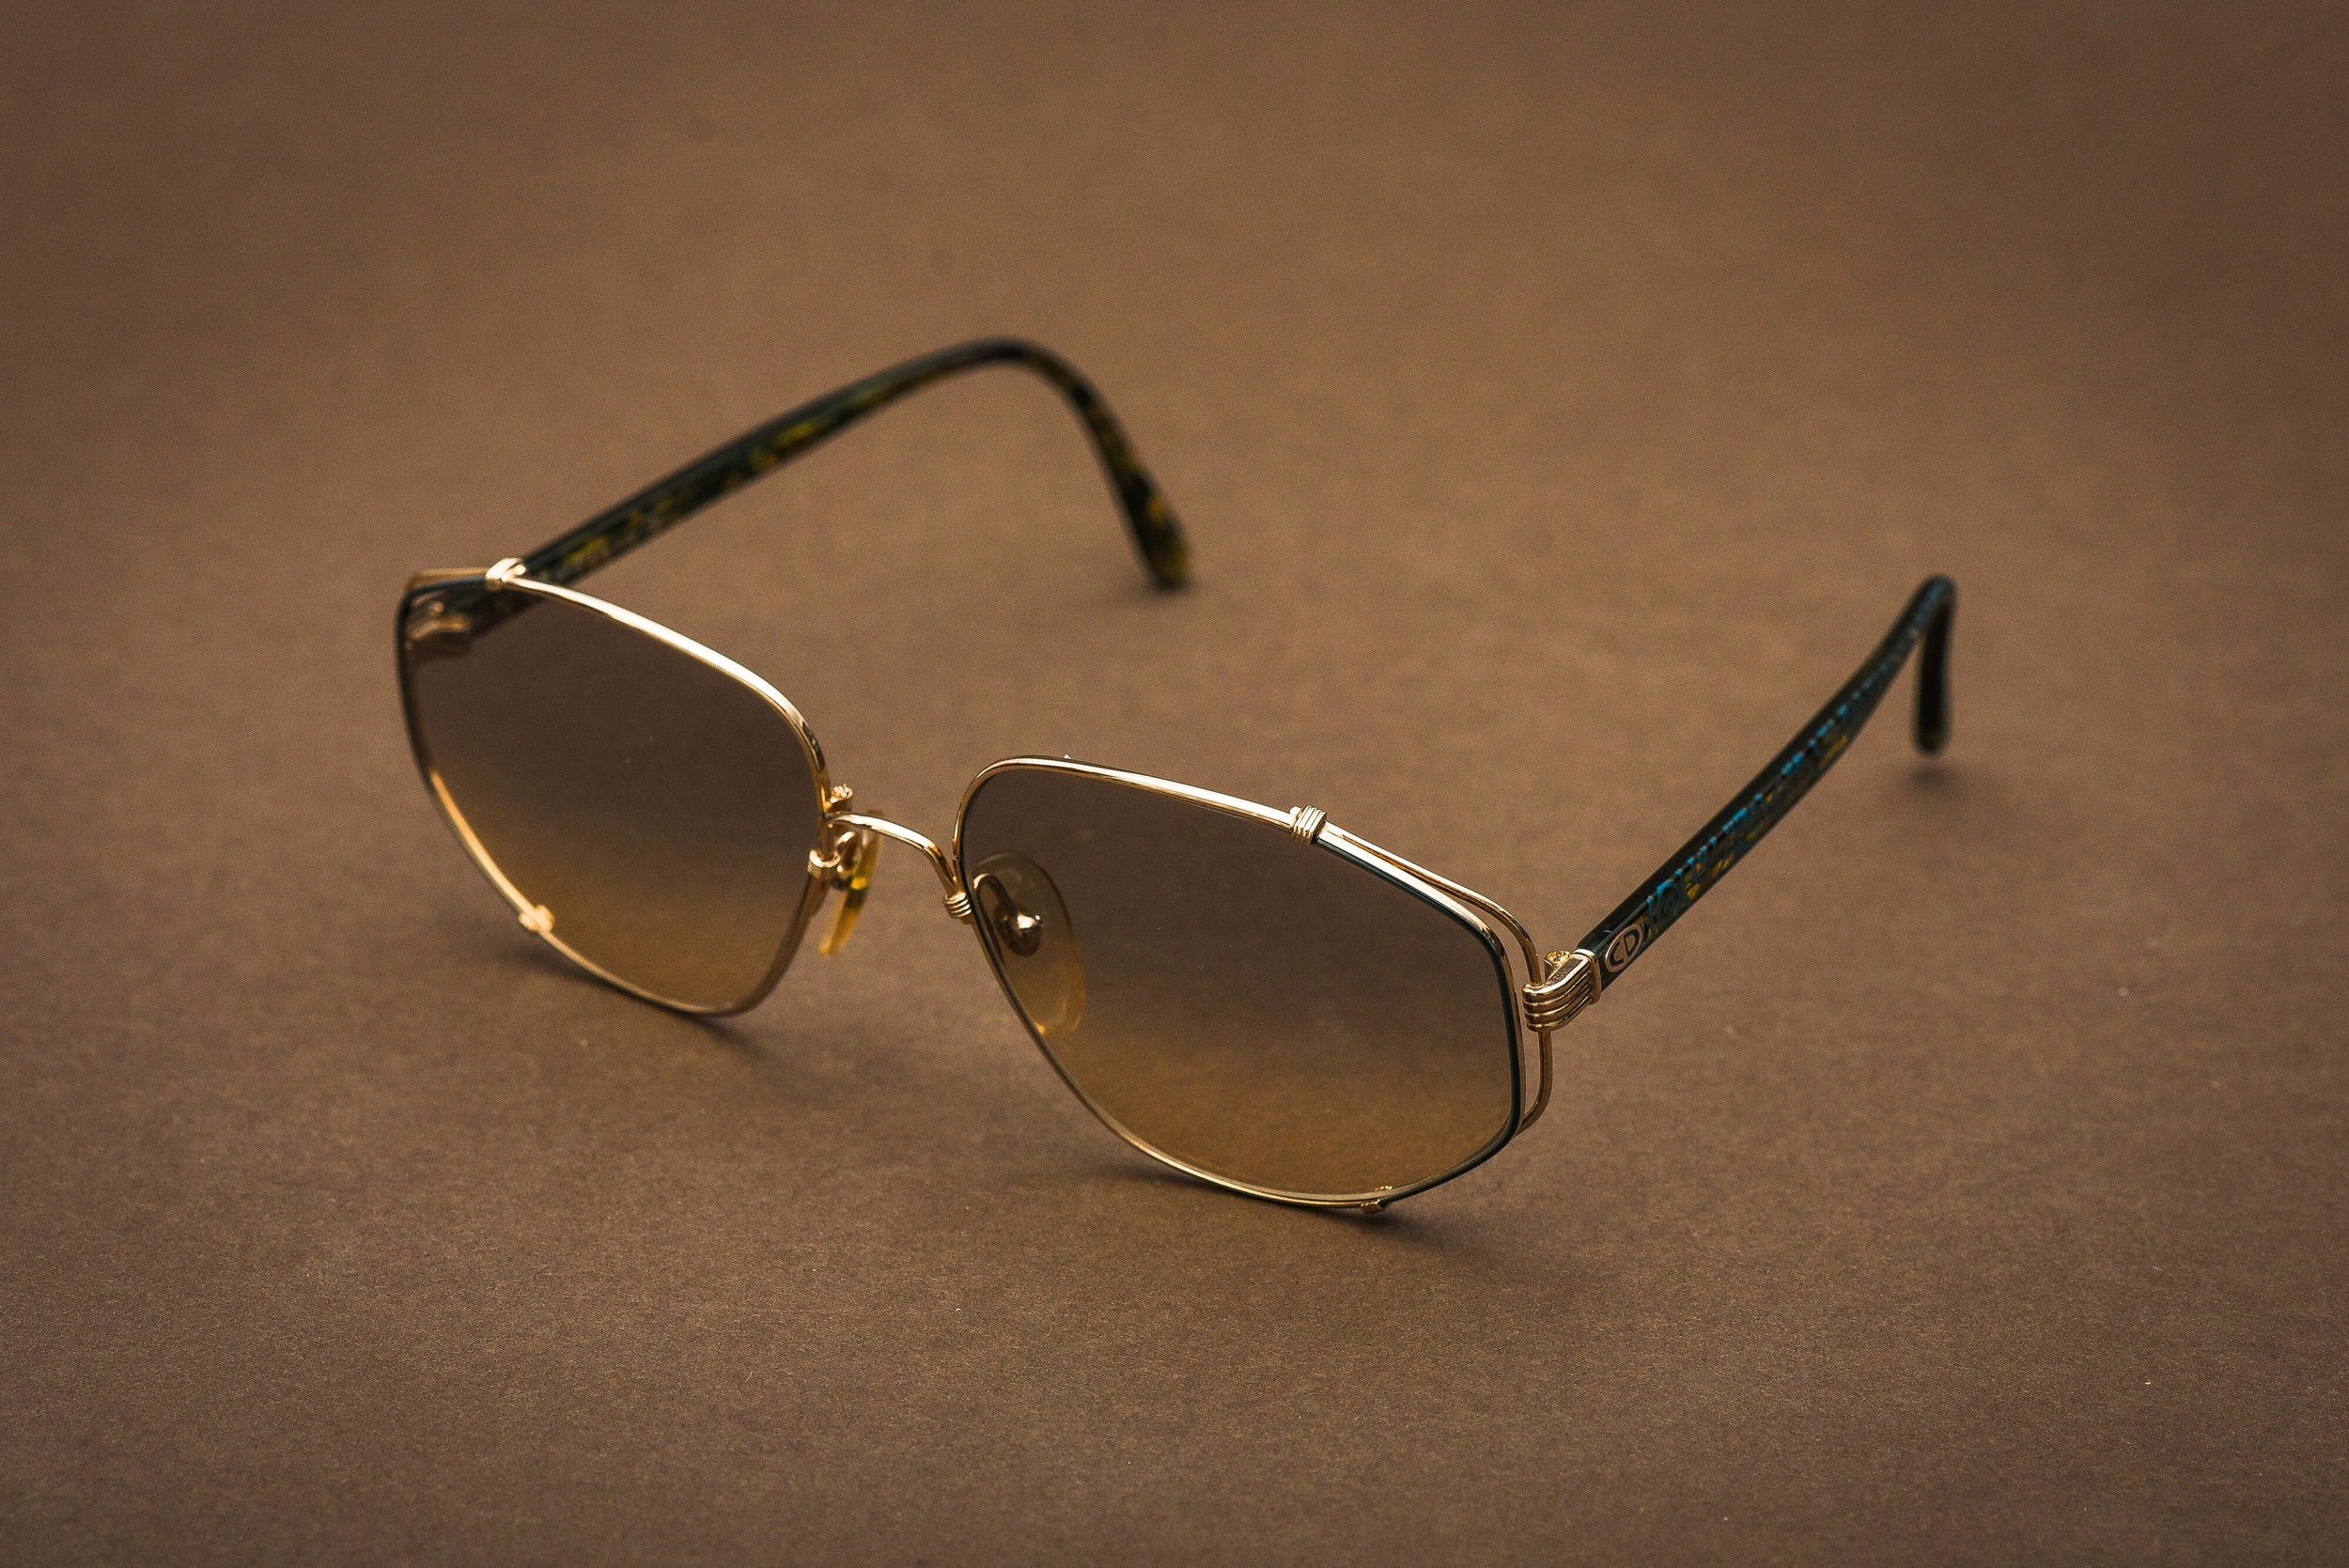 Christian Dior 2697 sunglasses